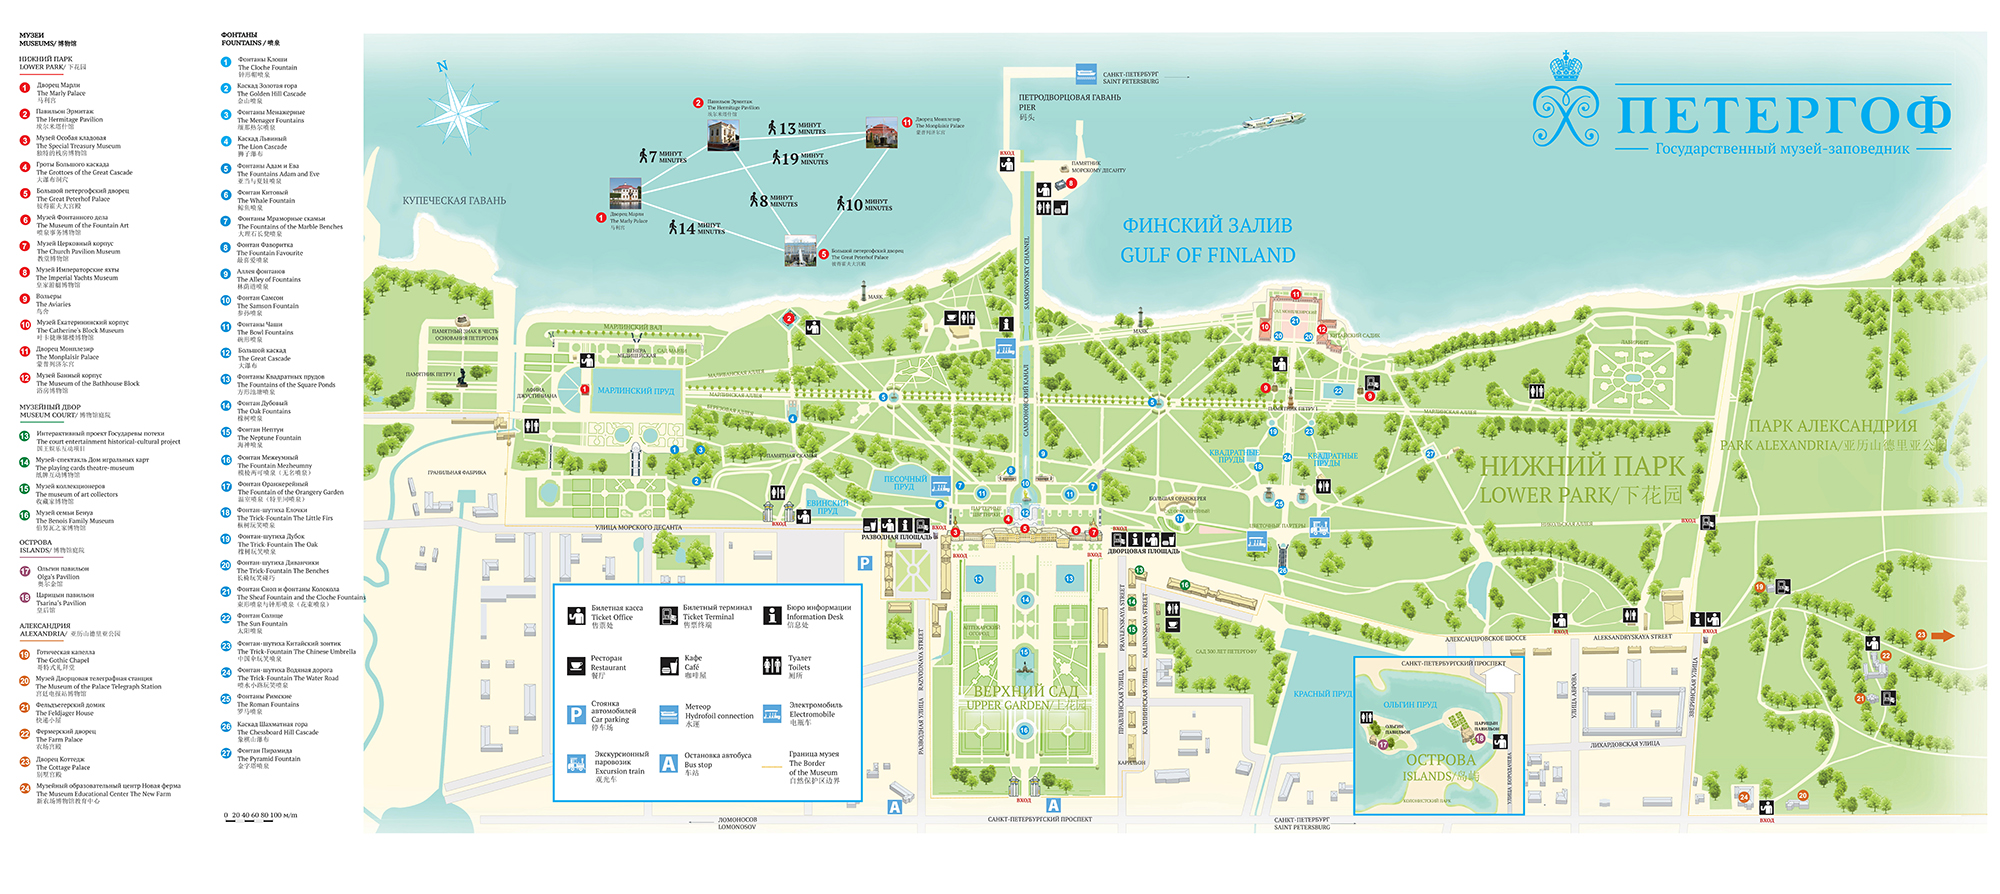 Mappa - I palazzi e i giardini di Peterhof